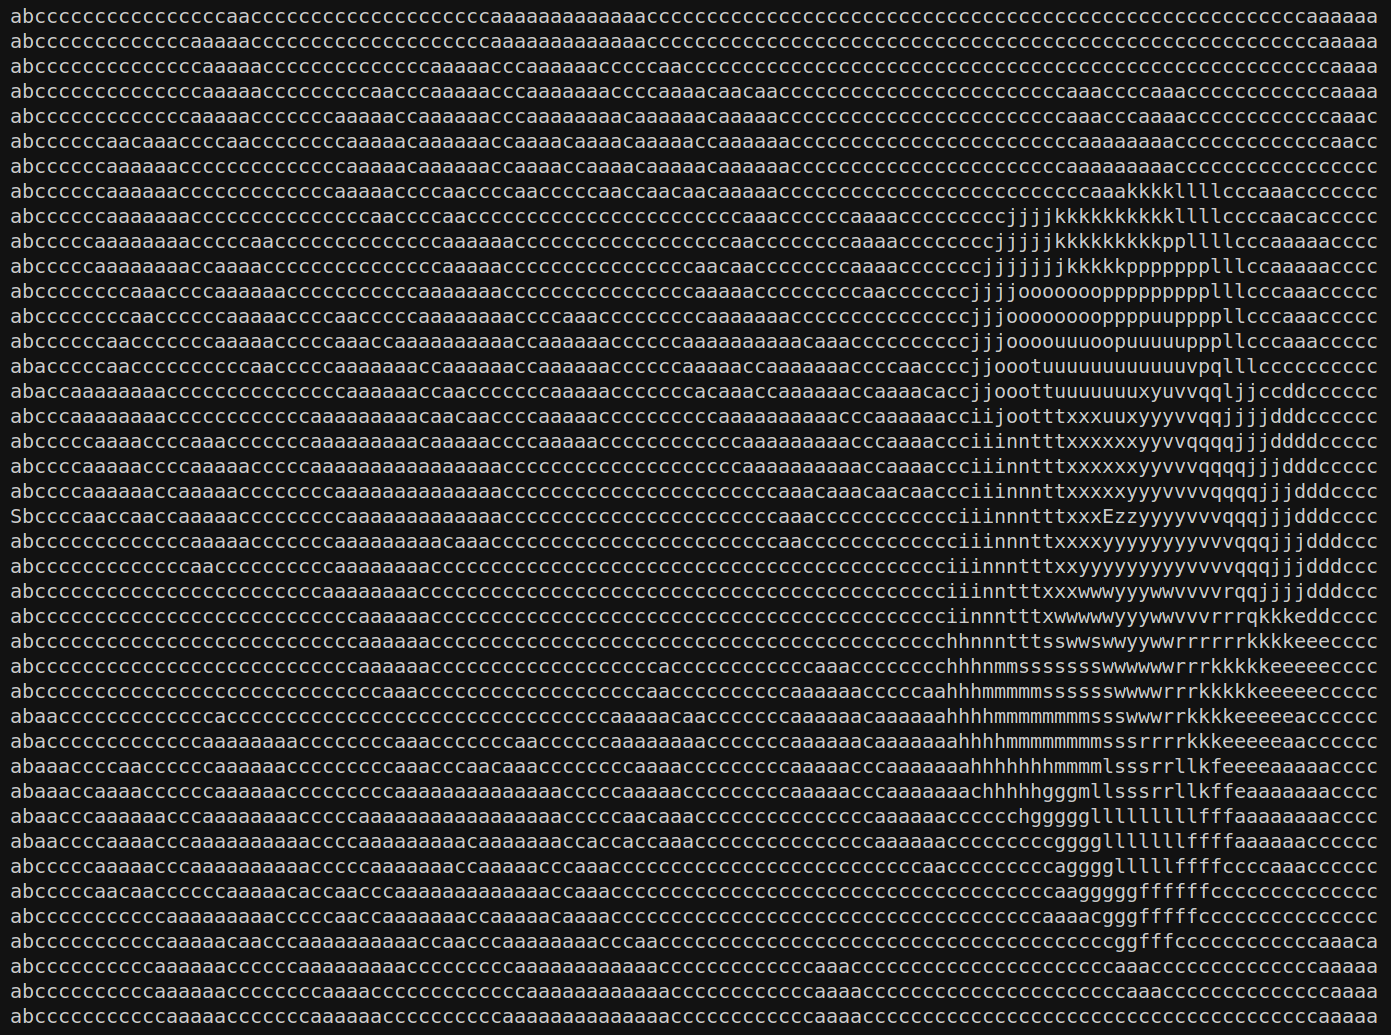 ASCII height diagram of the larger input